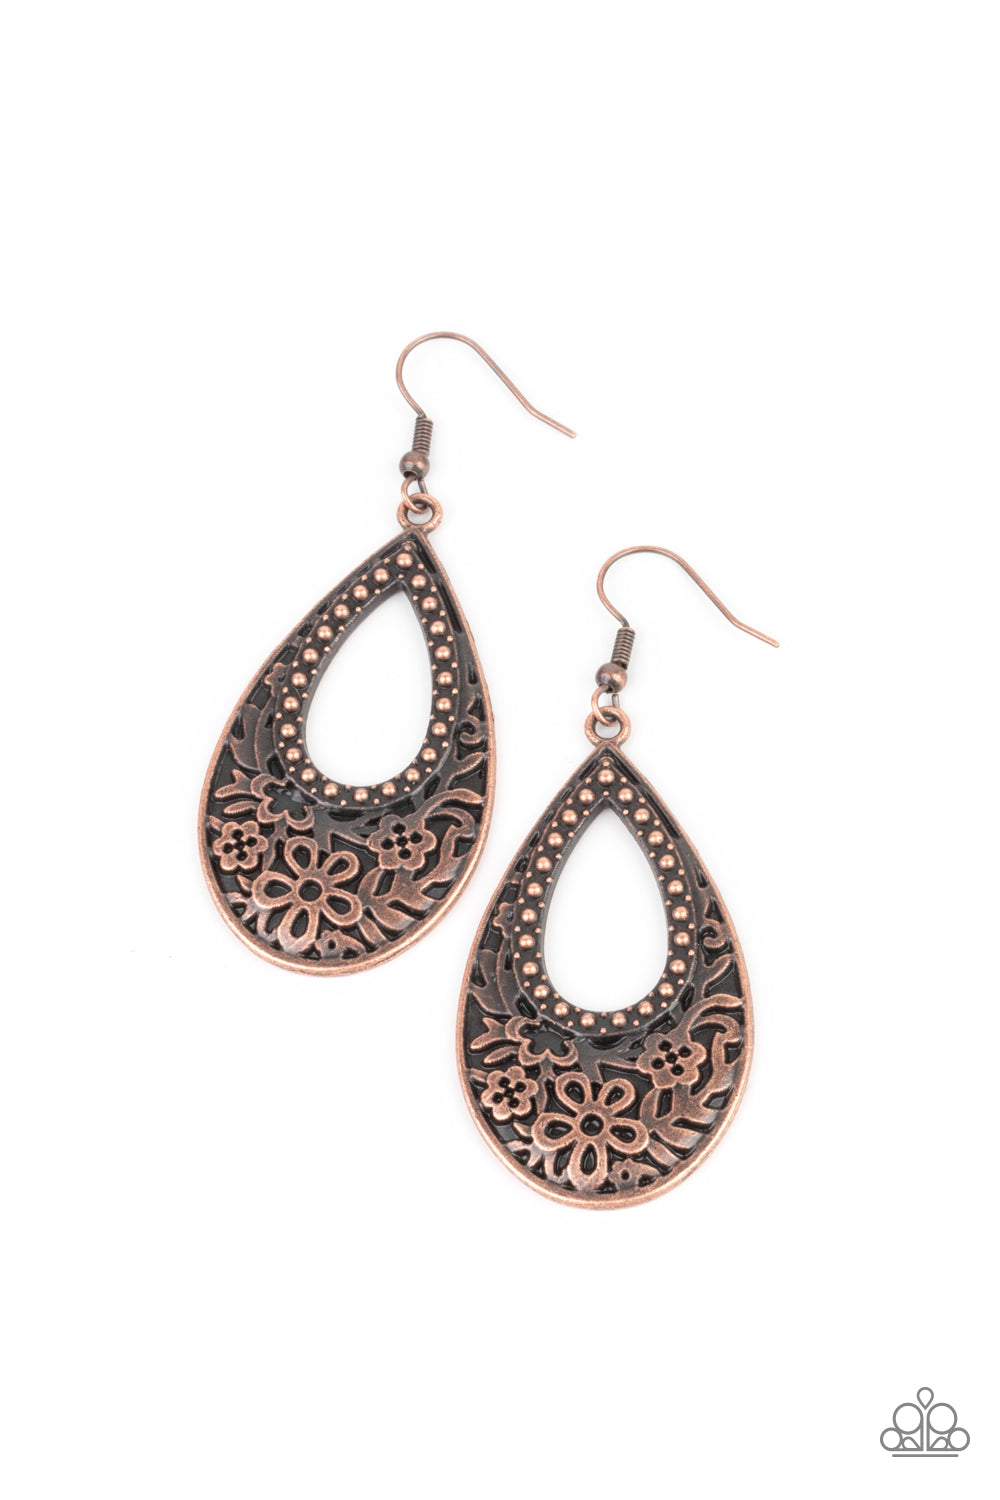 Organically Opulent - Copper Earrings - Princess Glam Shop